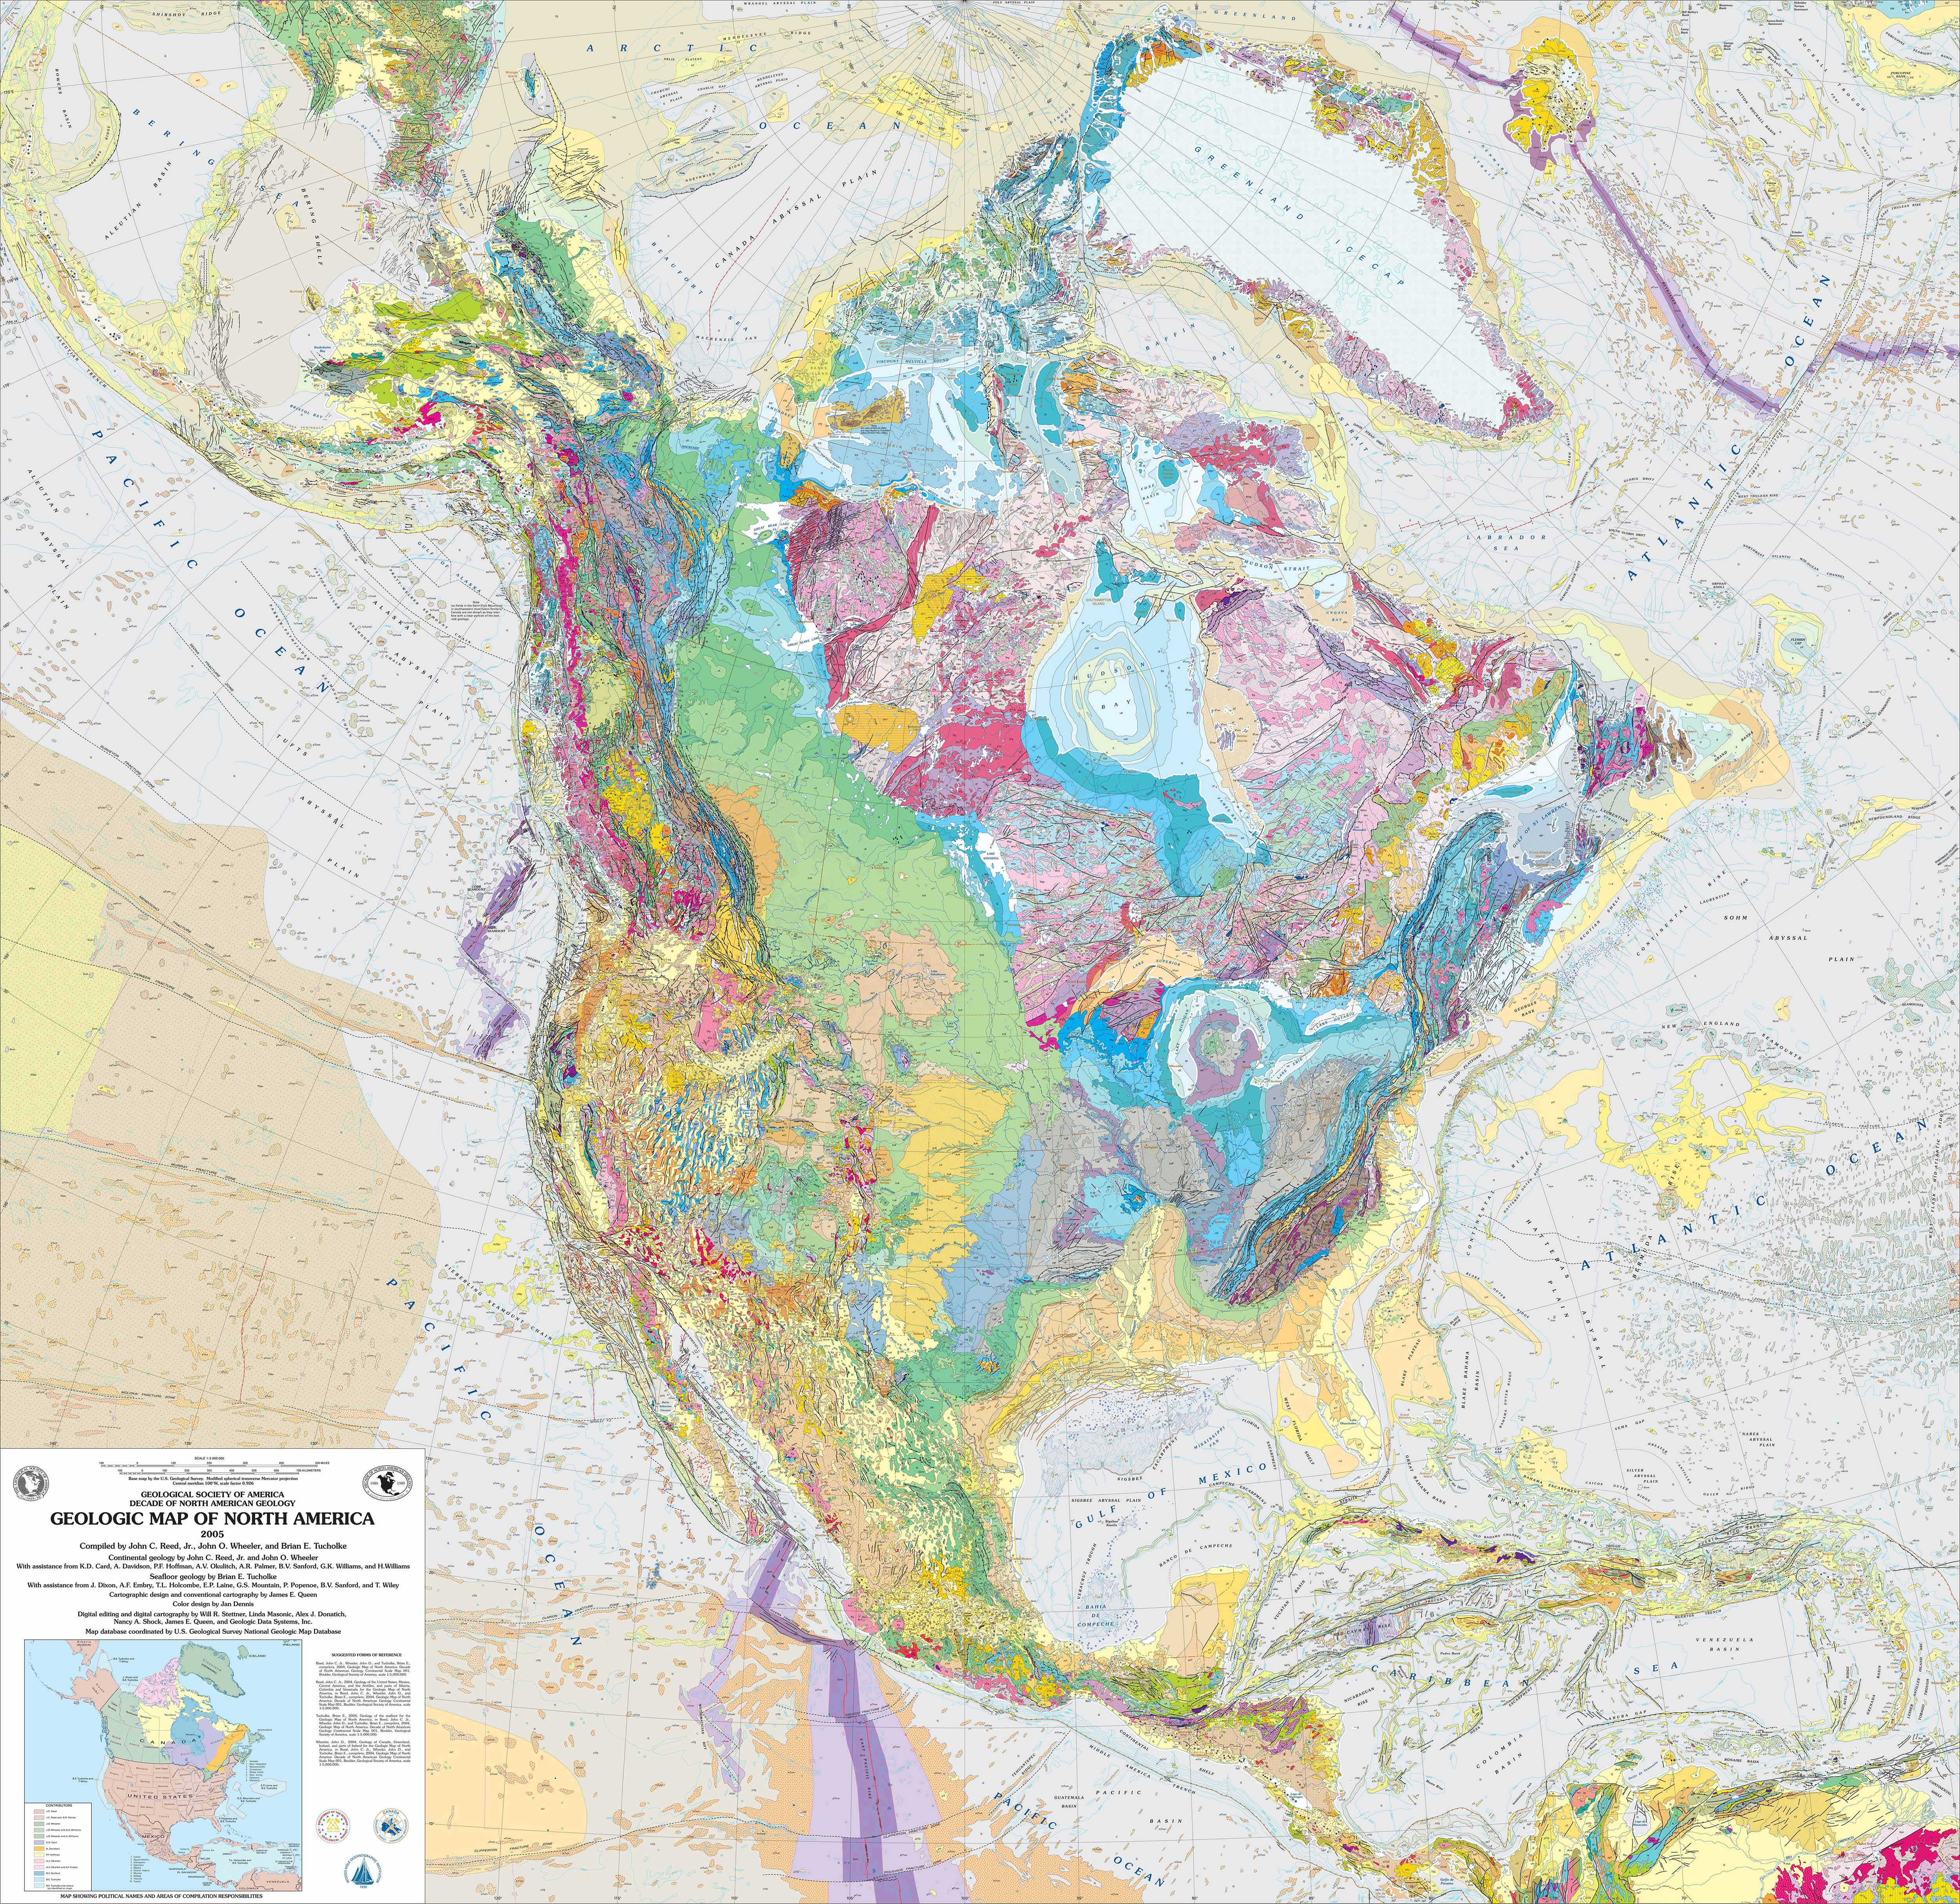 North America Geological Map